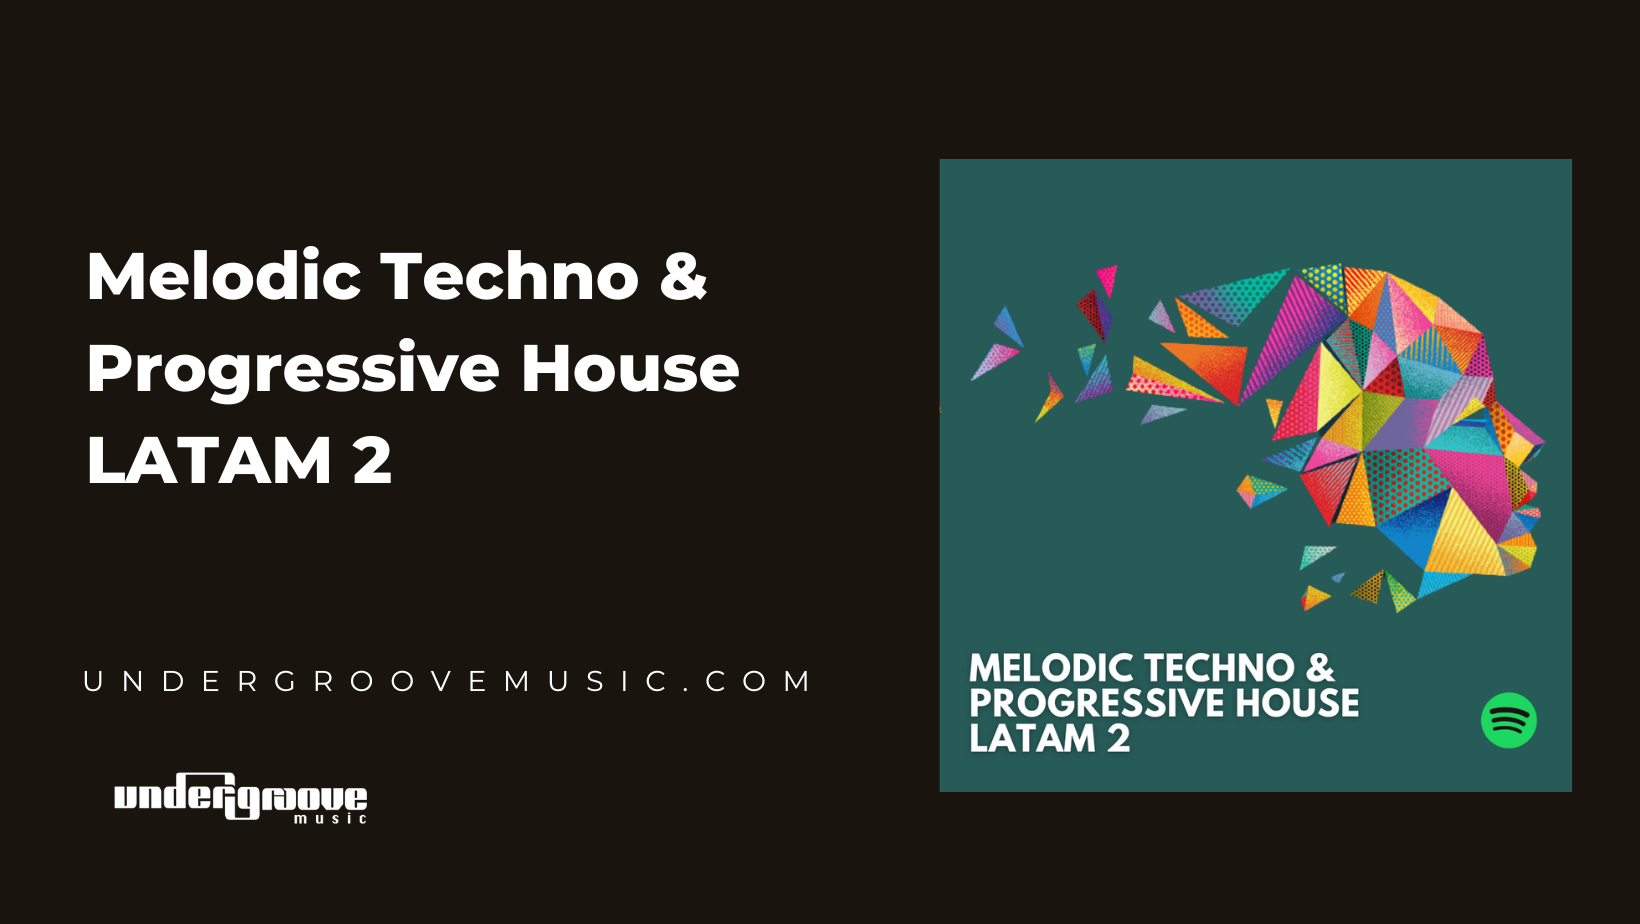 Melodic Techno & Progressive House LATAM 2